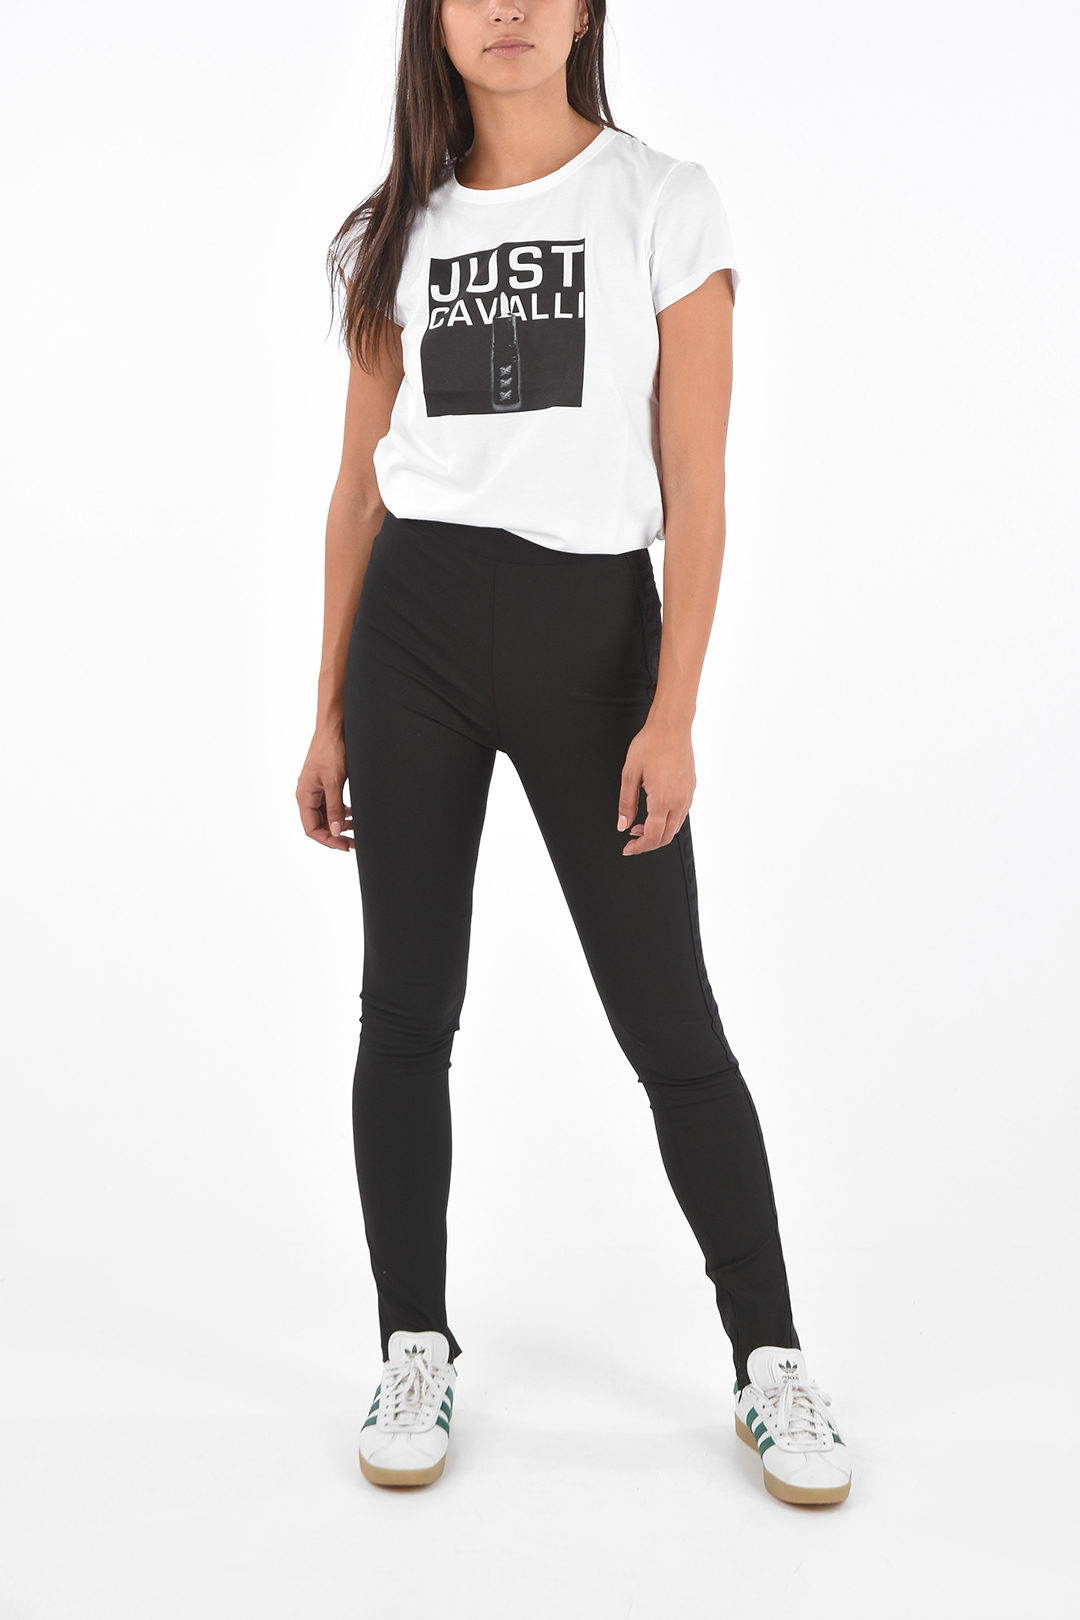 Stereotype handelaar Bezit Just Cavalli Side Logo Band Slim Fit Stirrup Pants women - Glamood Outlet